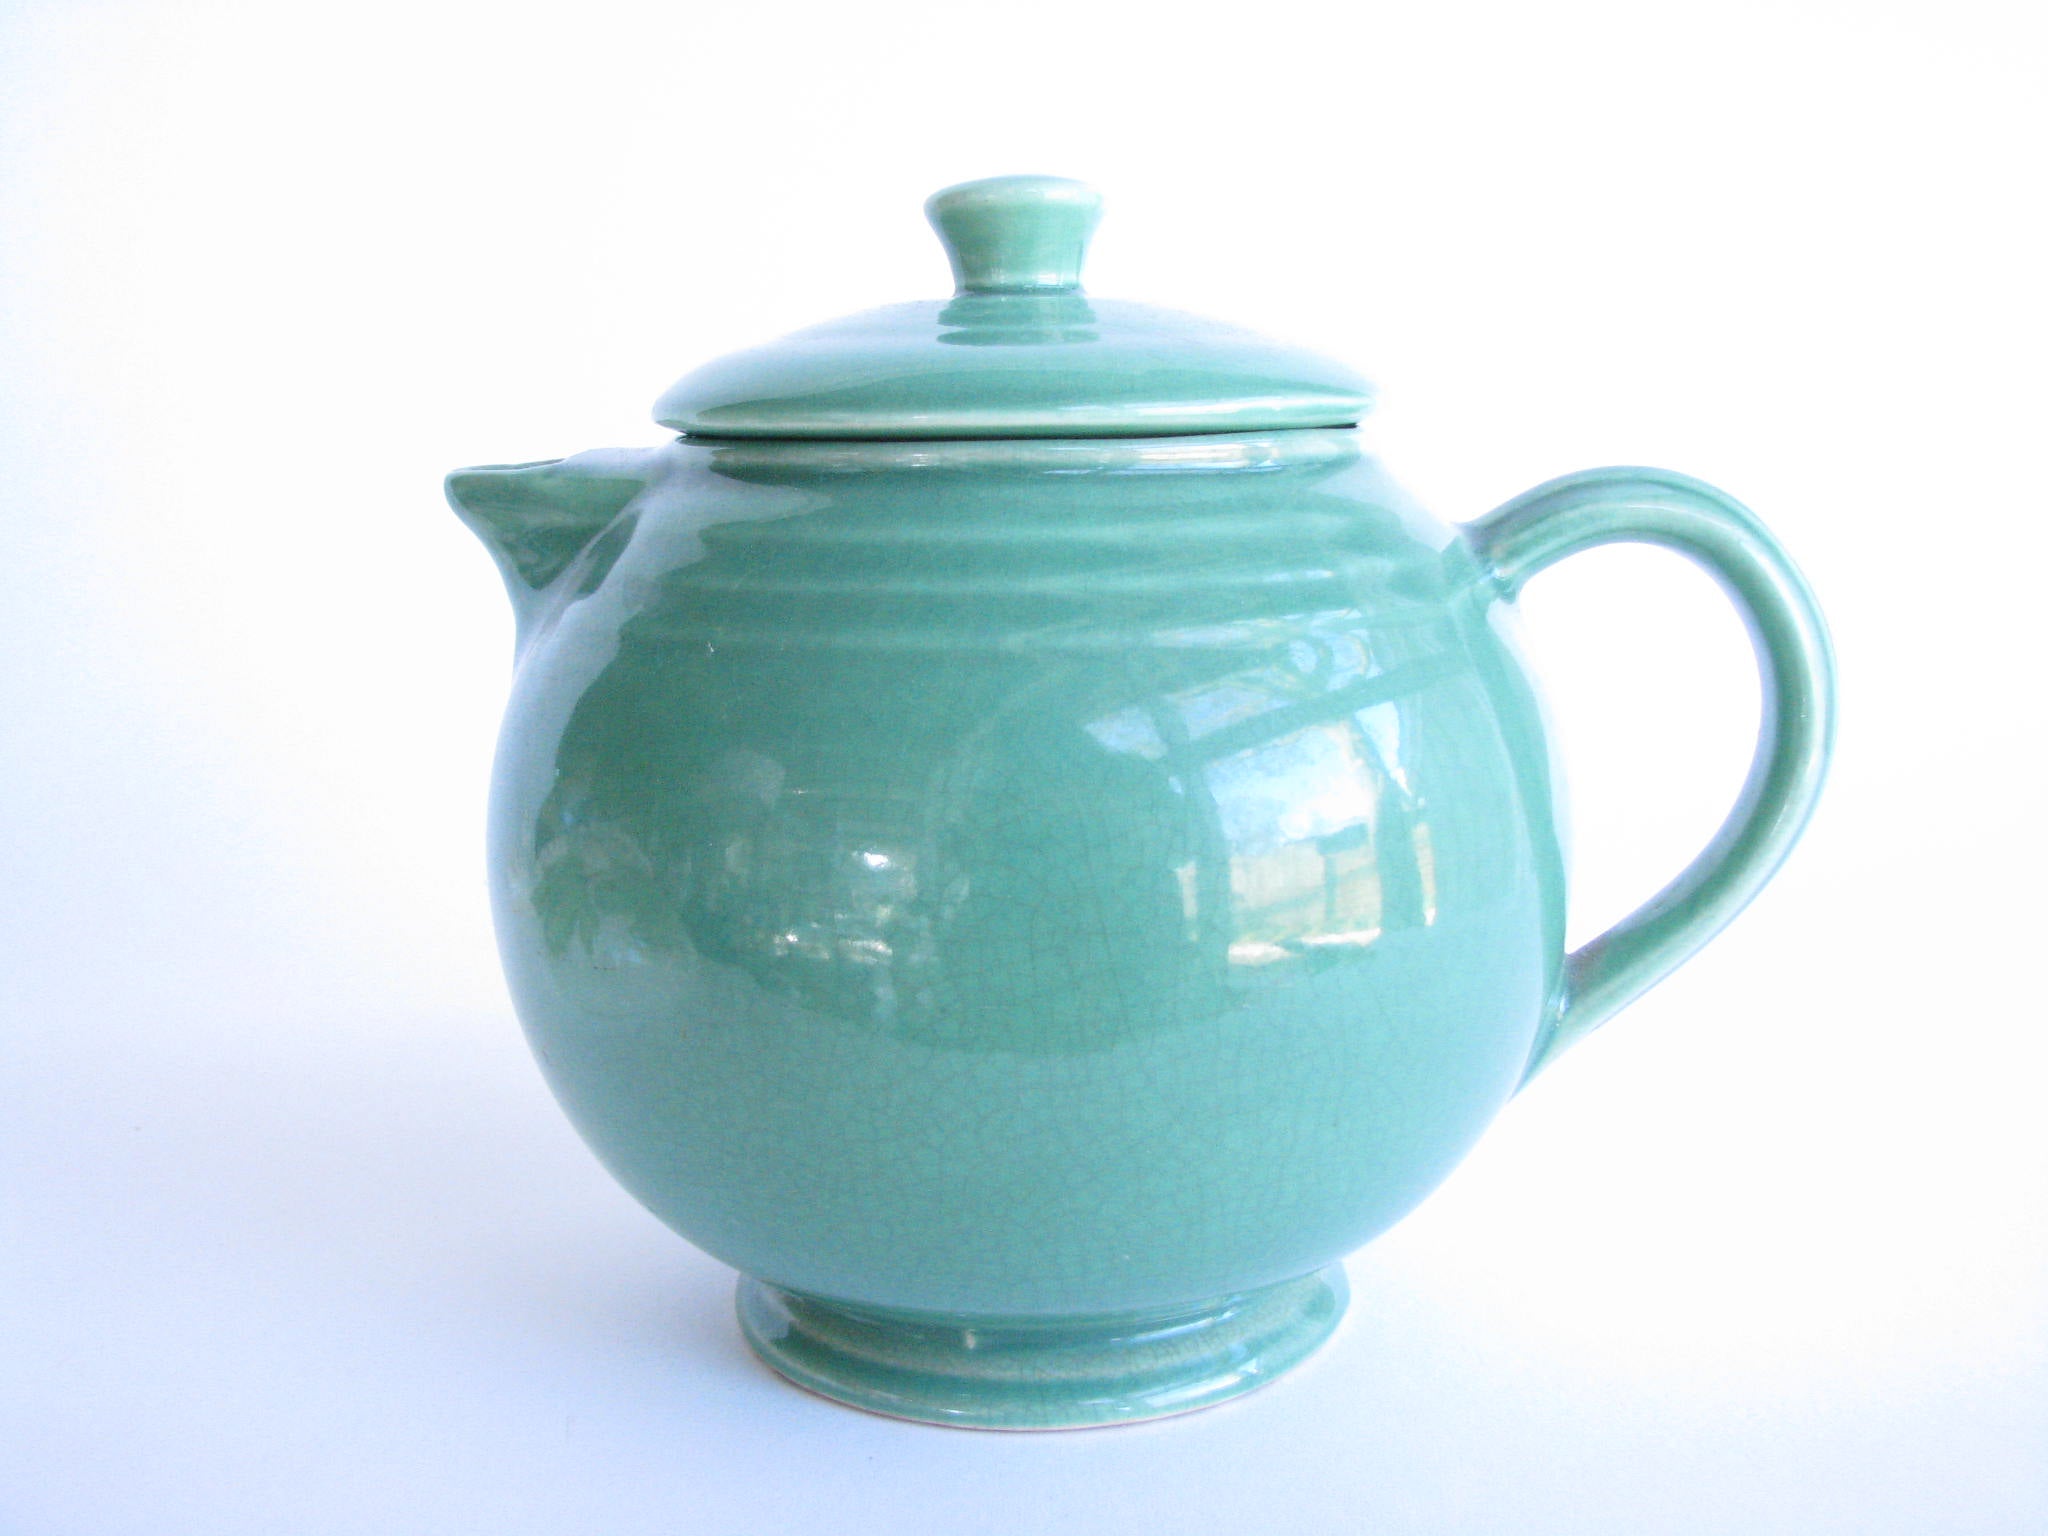 The Art Deco 1930 Teapot